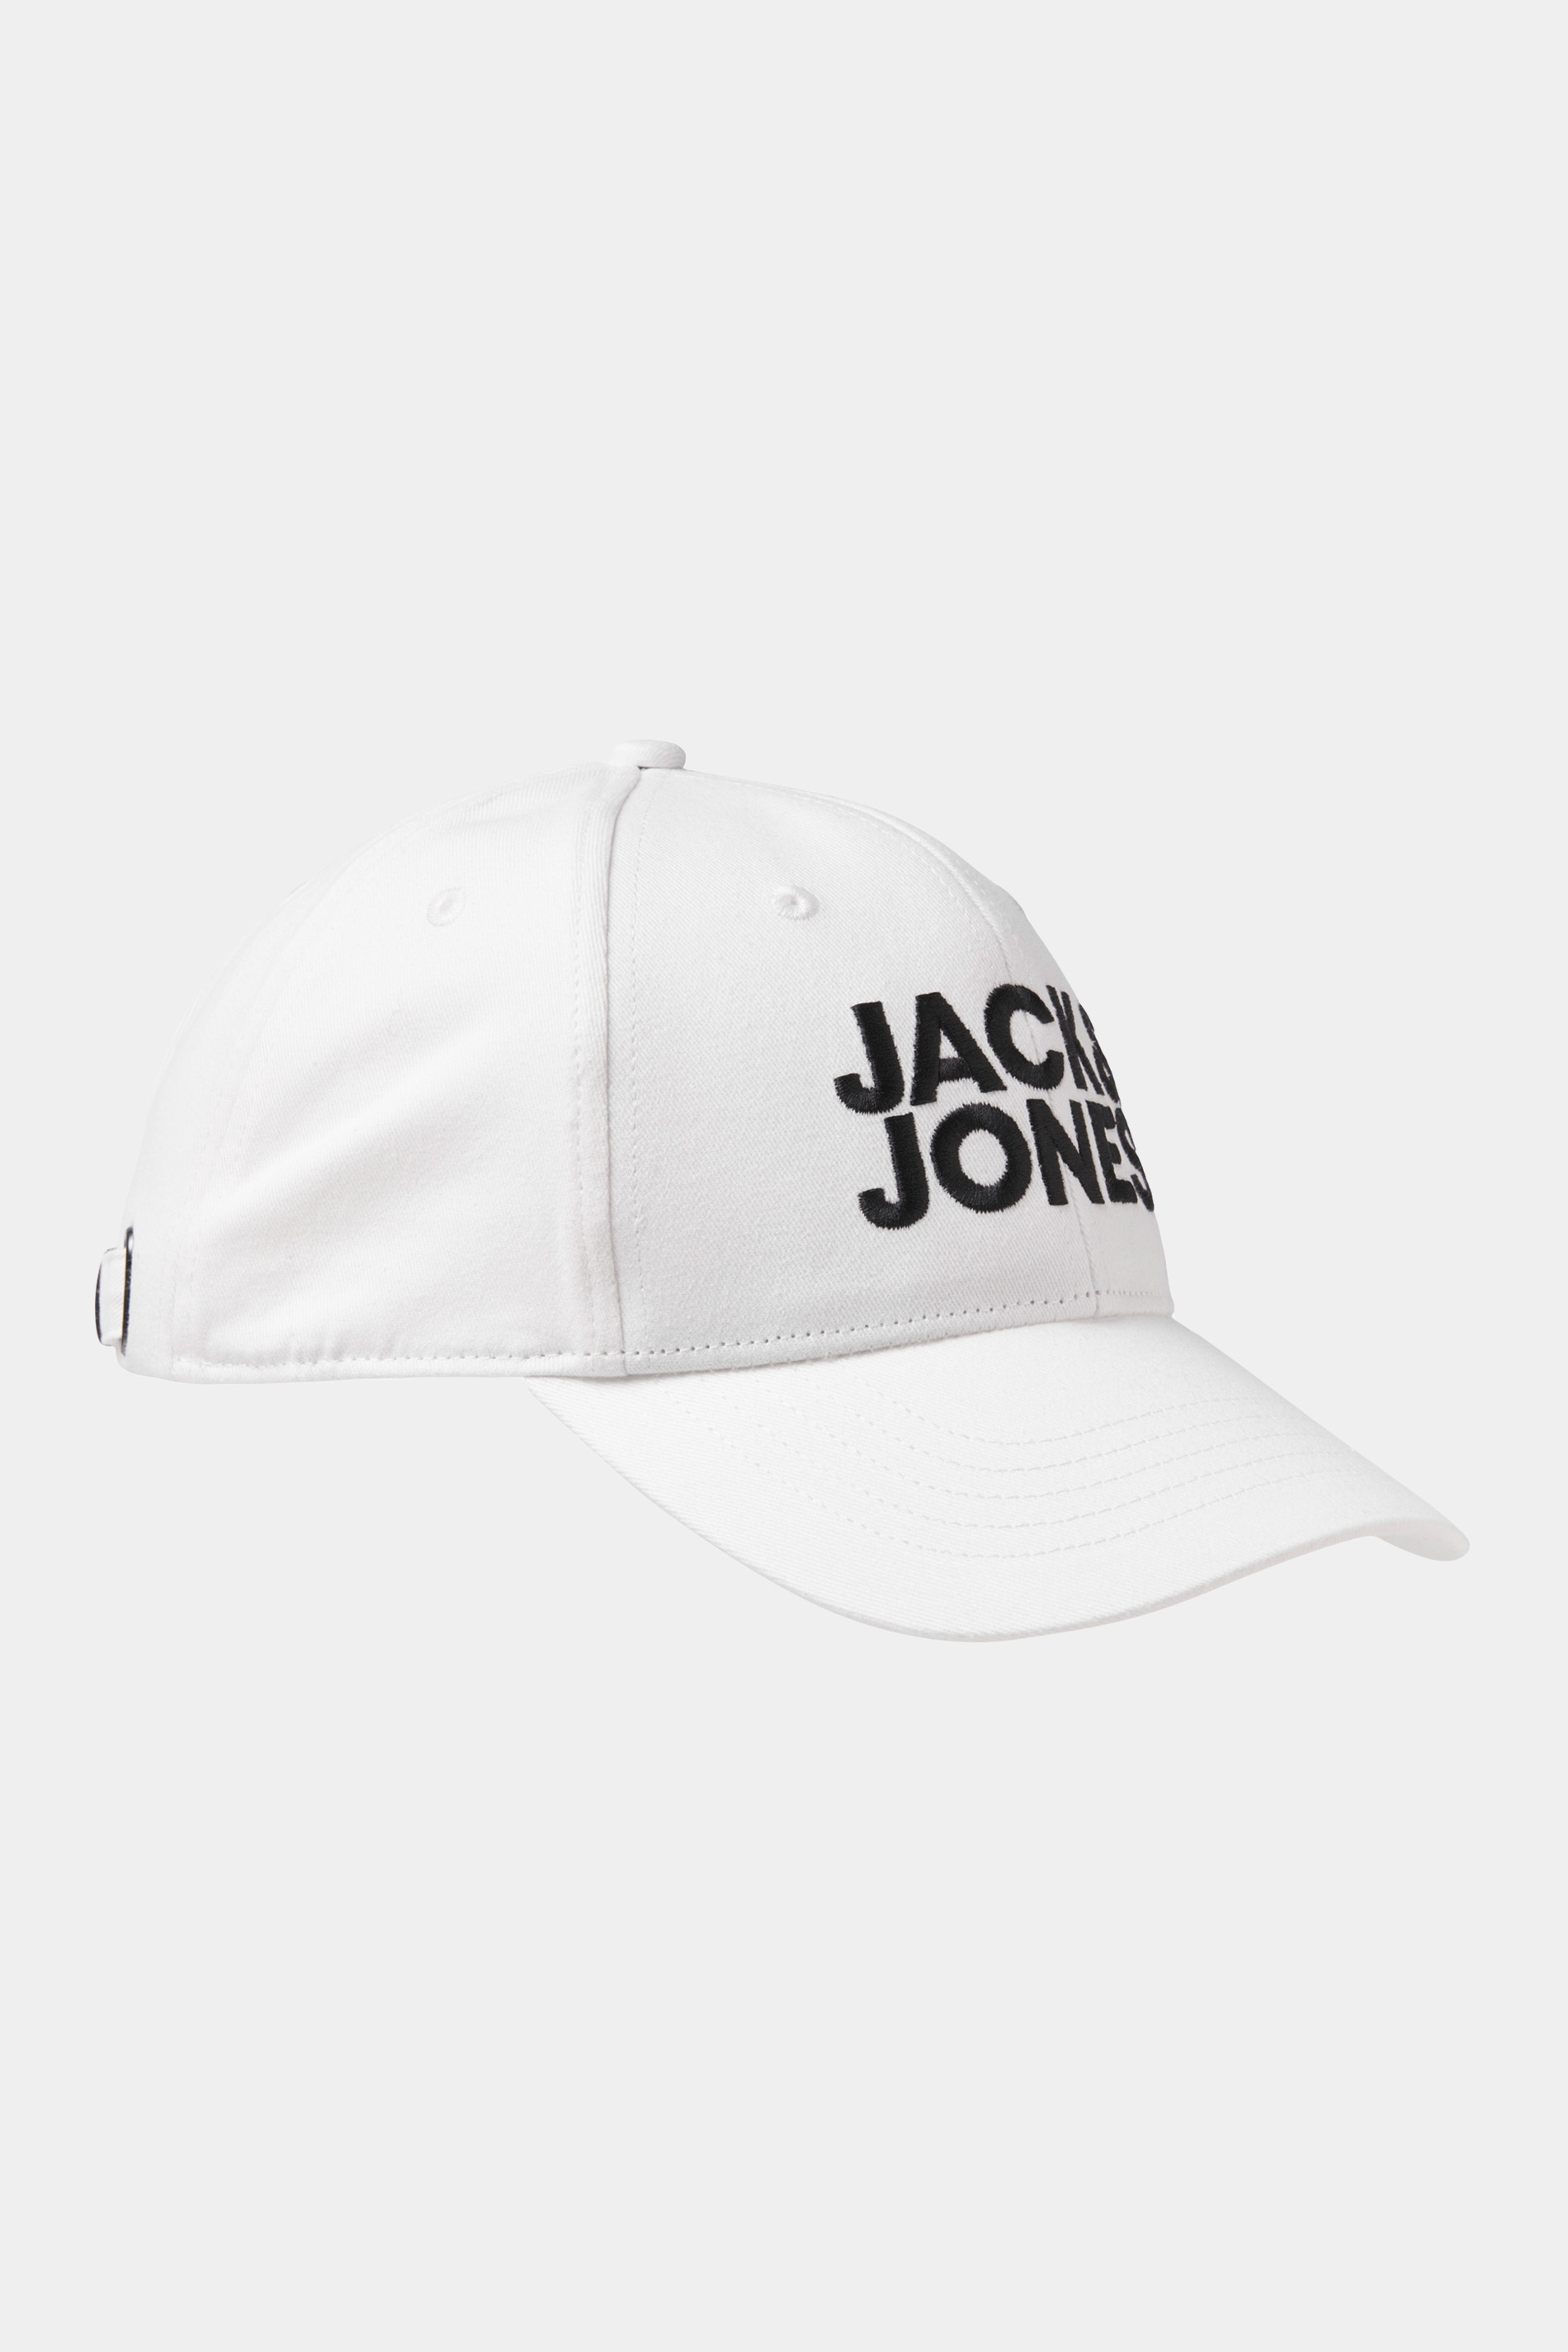 JACK & JONES White & Black Baseball Cap | BadRhino 3